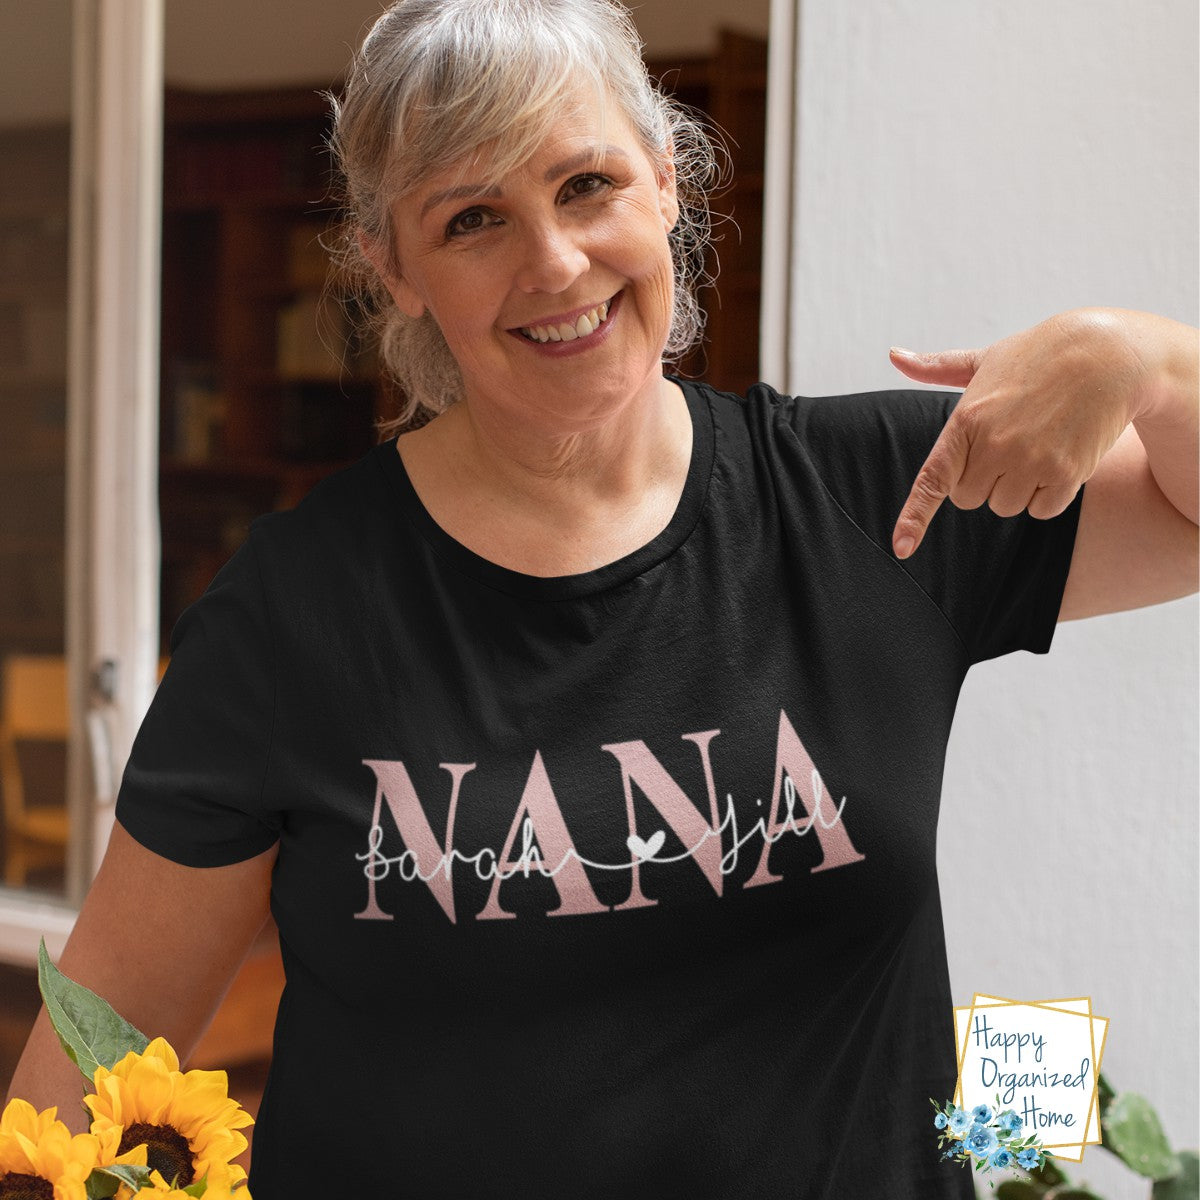 Nana Shirt with Grand childrens names -  Personalized Grandparent shirt - ladies t-shirt